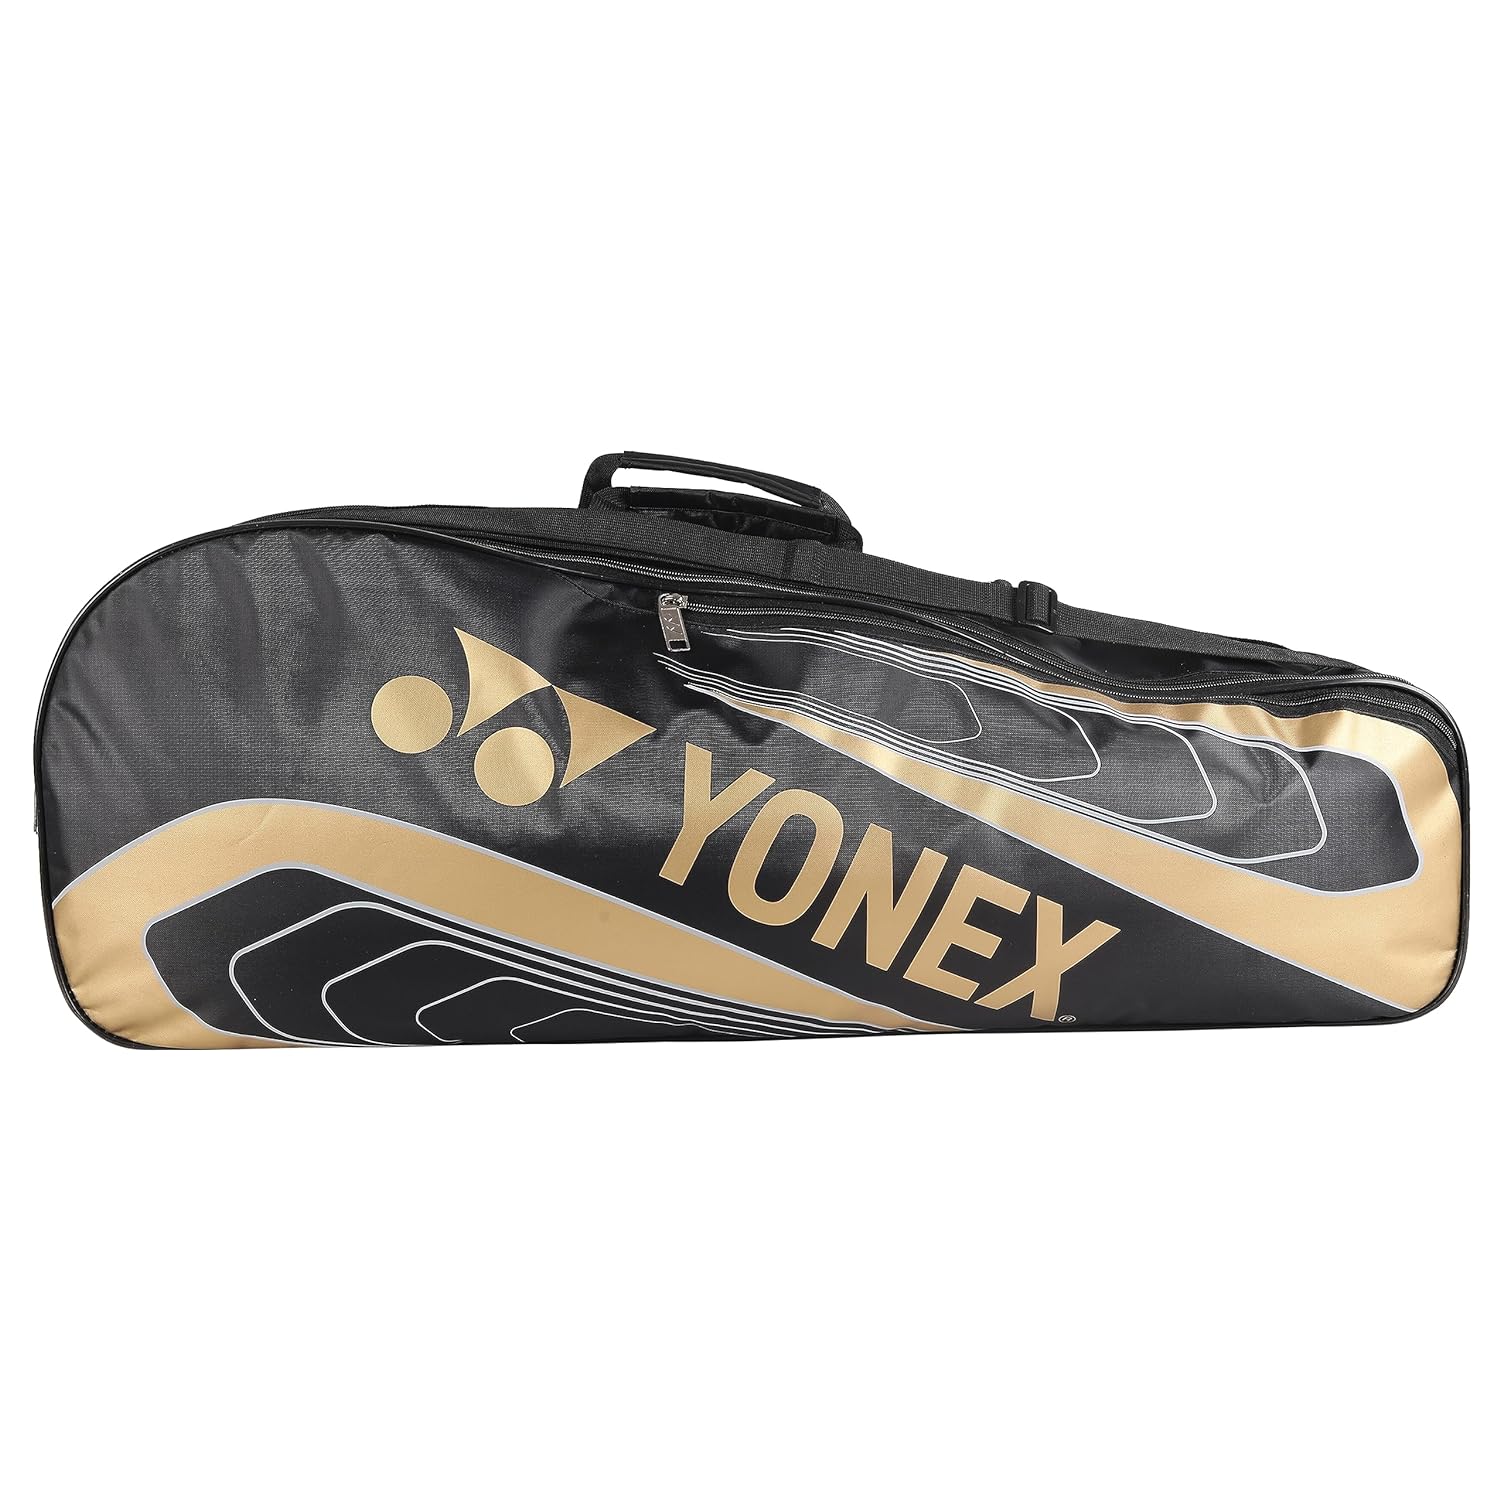 Yonex SUNR 23025 Badminton Kitbag - Best Price online Prokicksports.com